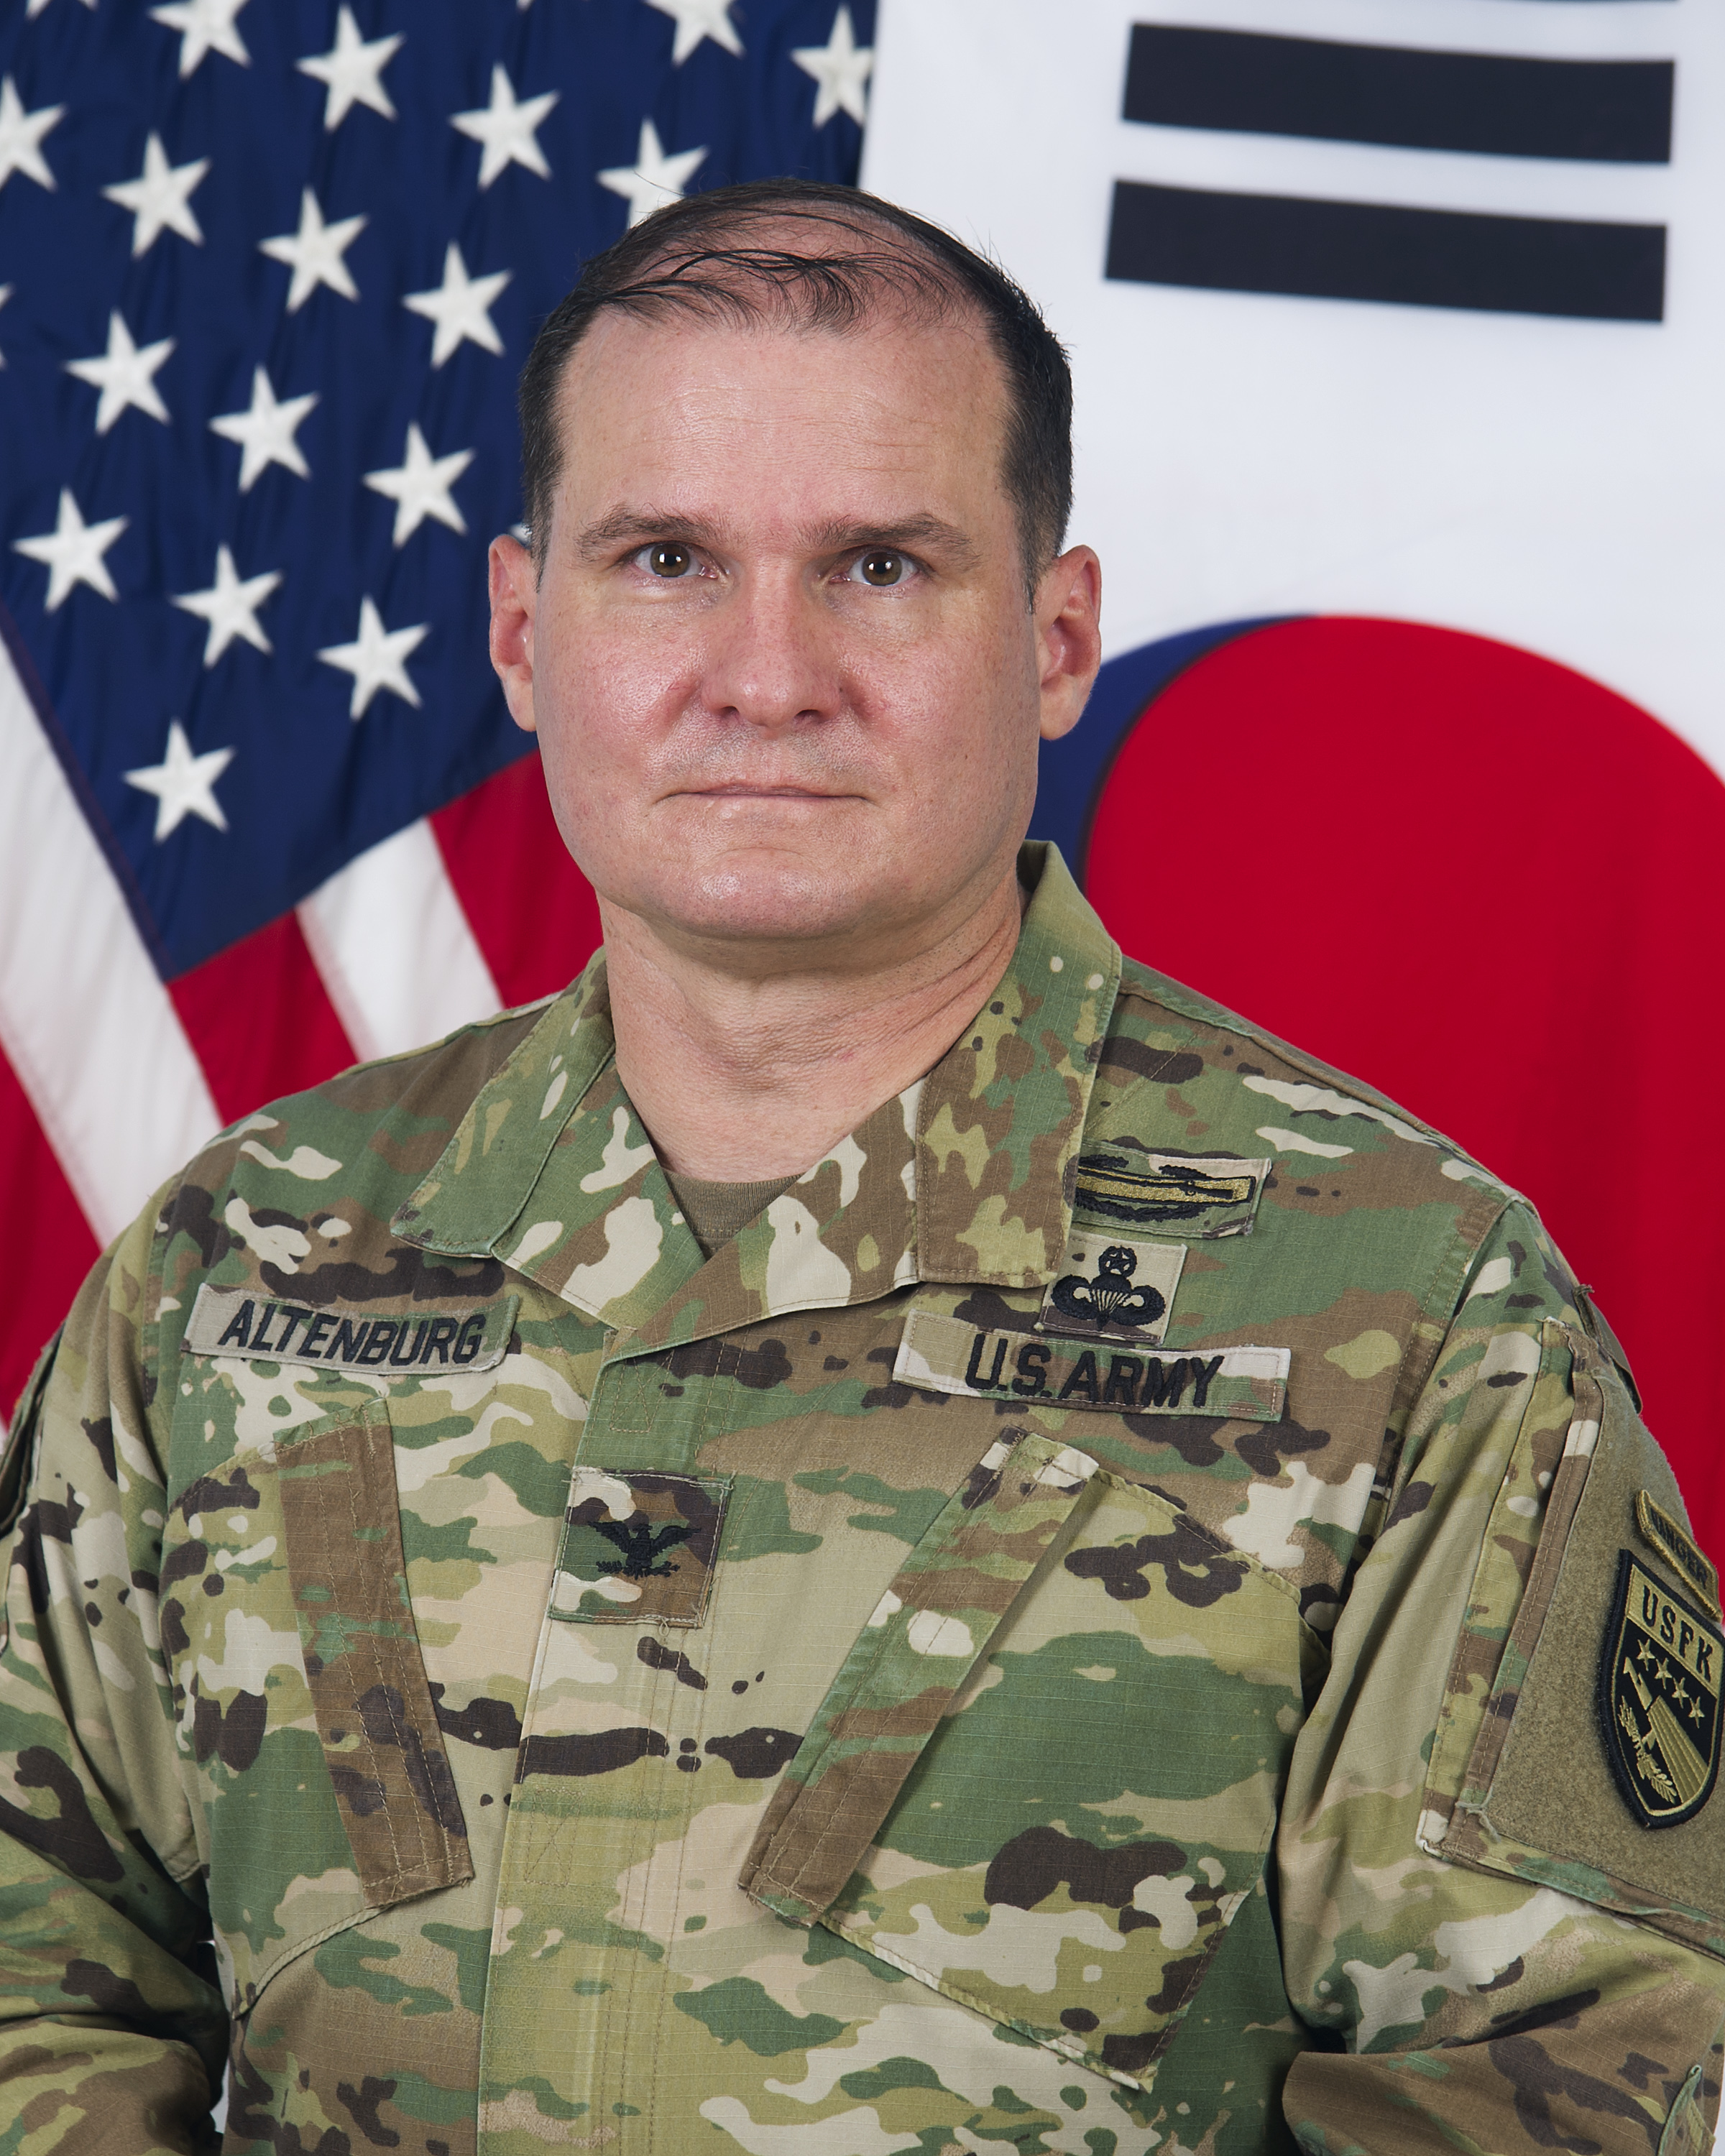 USFK Command Inspector General - COL Patrick S. Altenburg